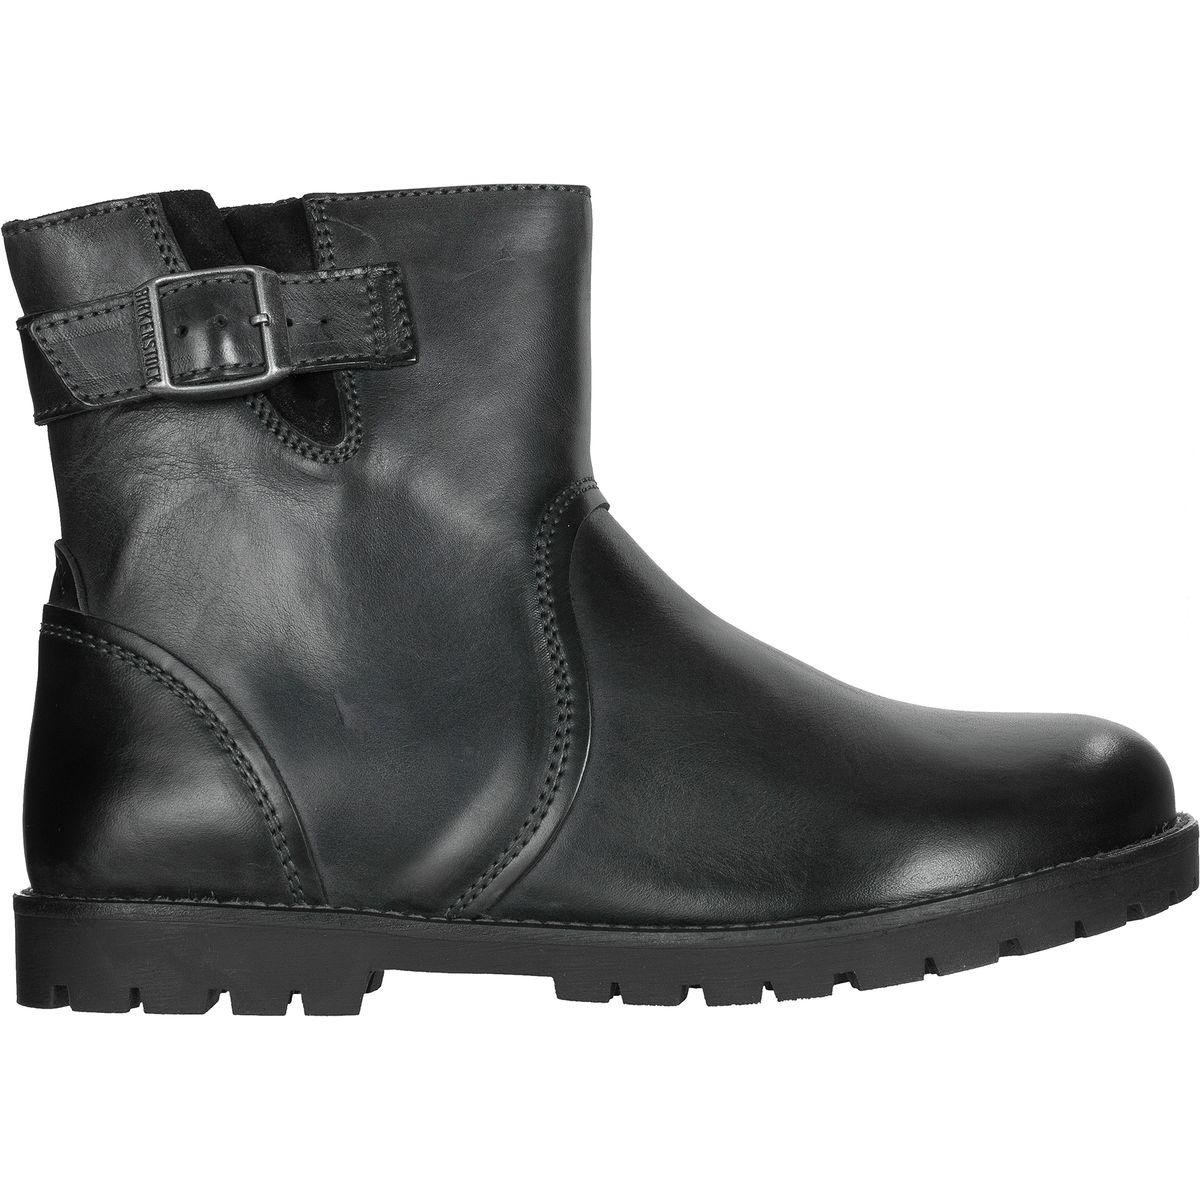 Birkenstock Stowe Leather Boot in Black Leather (Black) Lyst